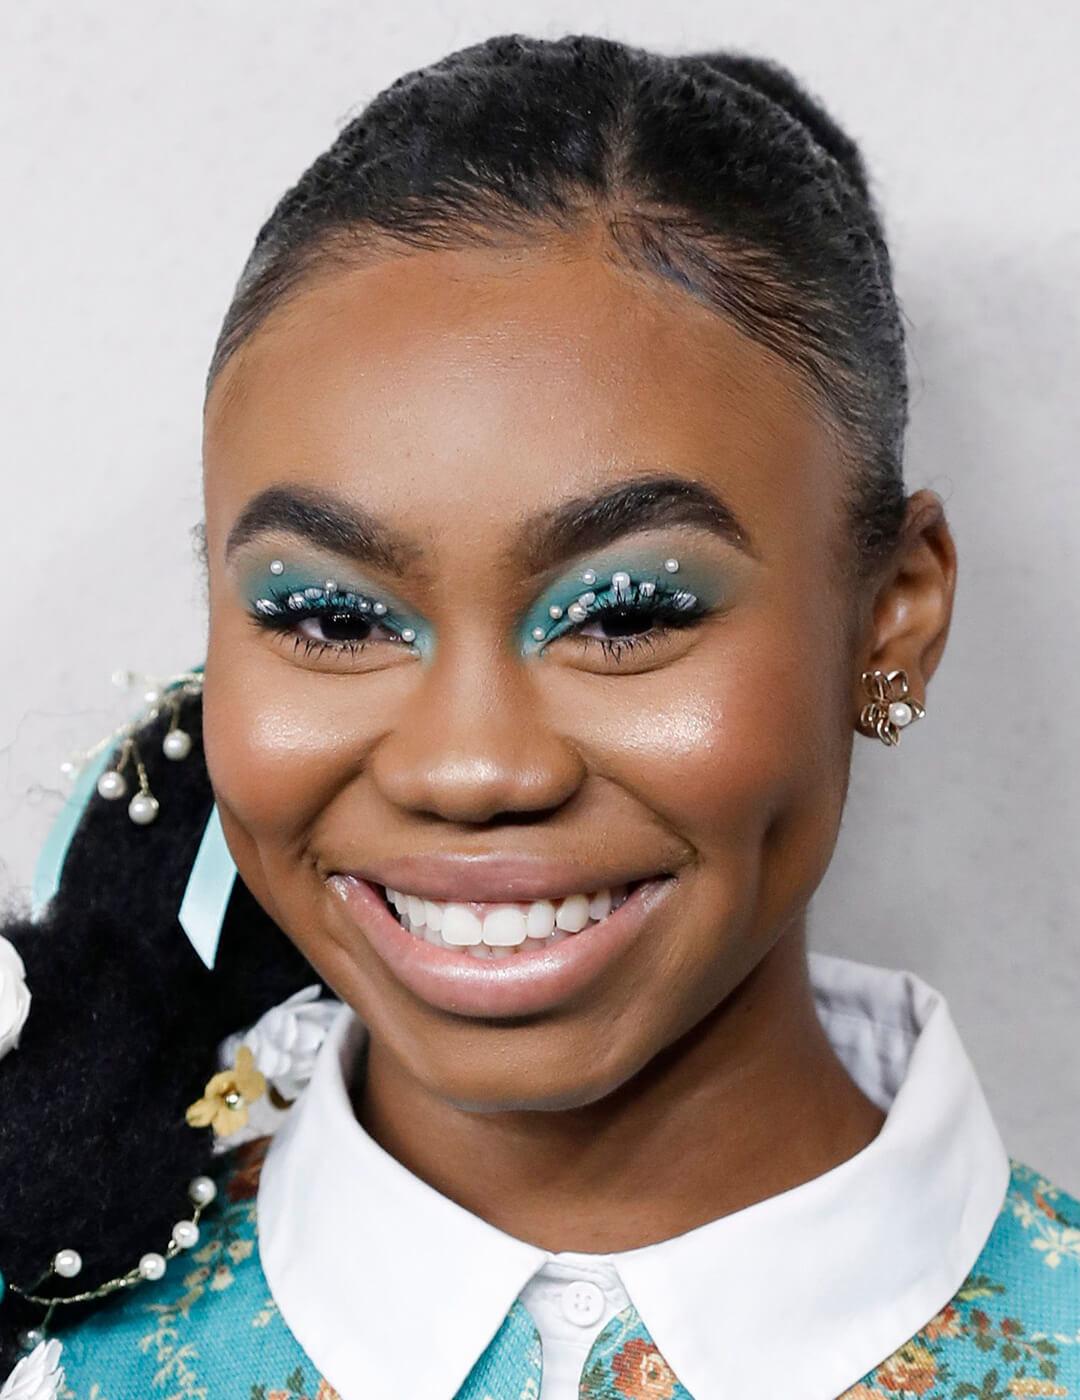 Close-up of a smiling Jordan Rice rocking blue eyeshadow makeup embellished with pearls